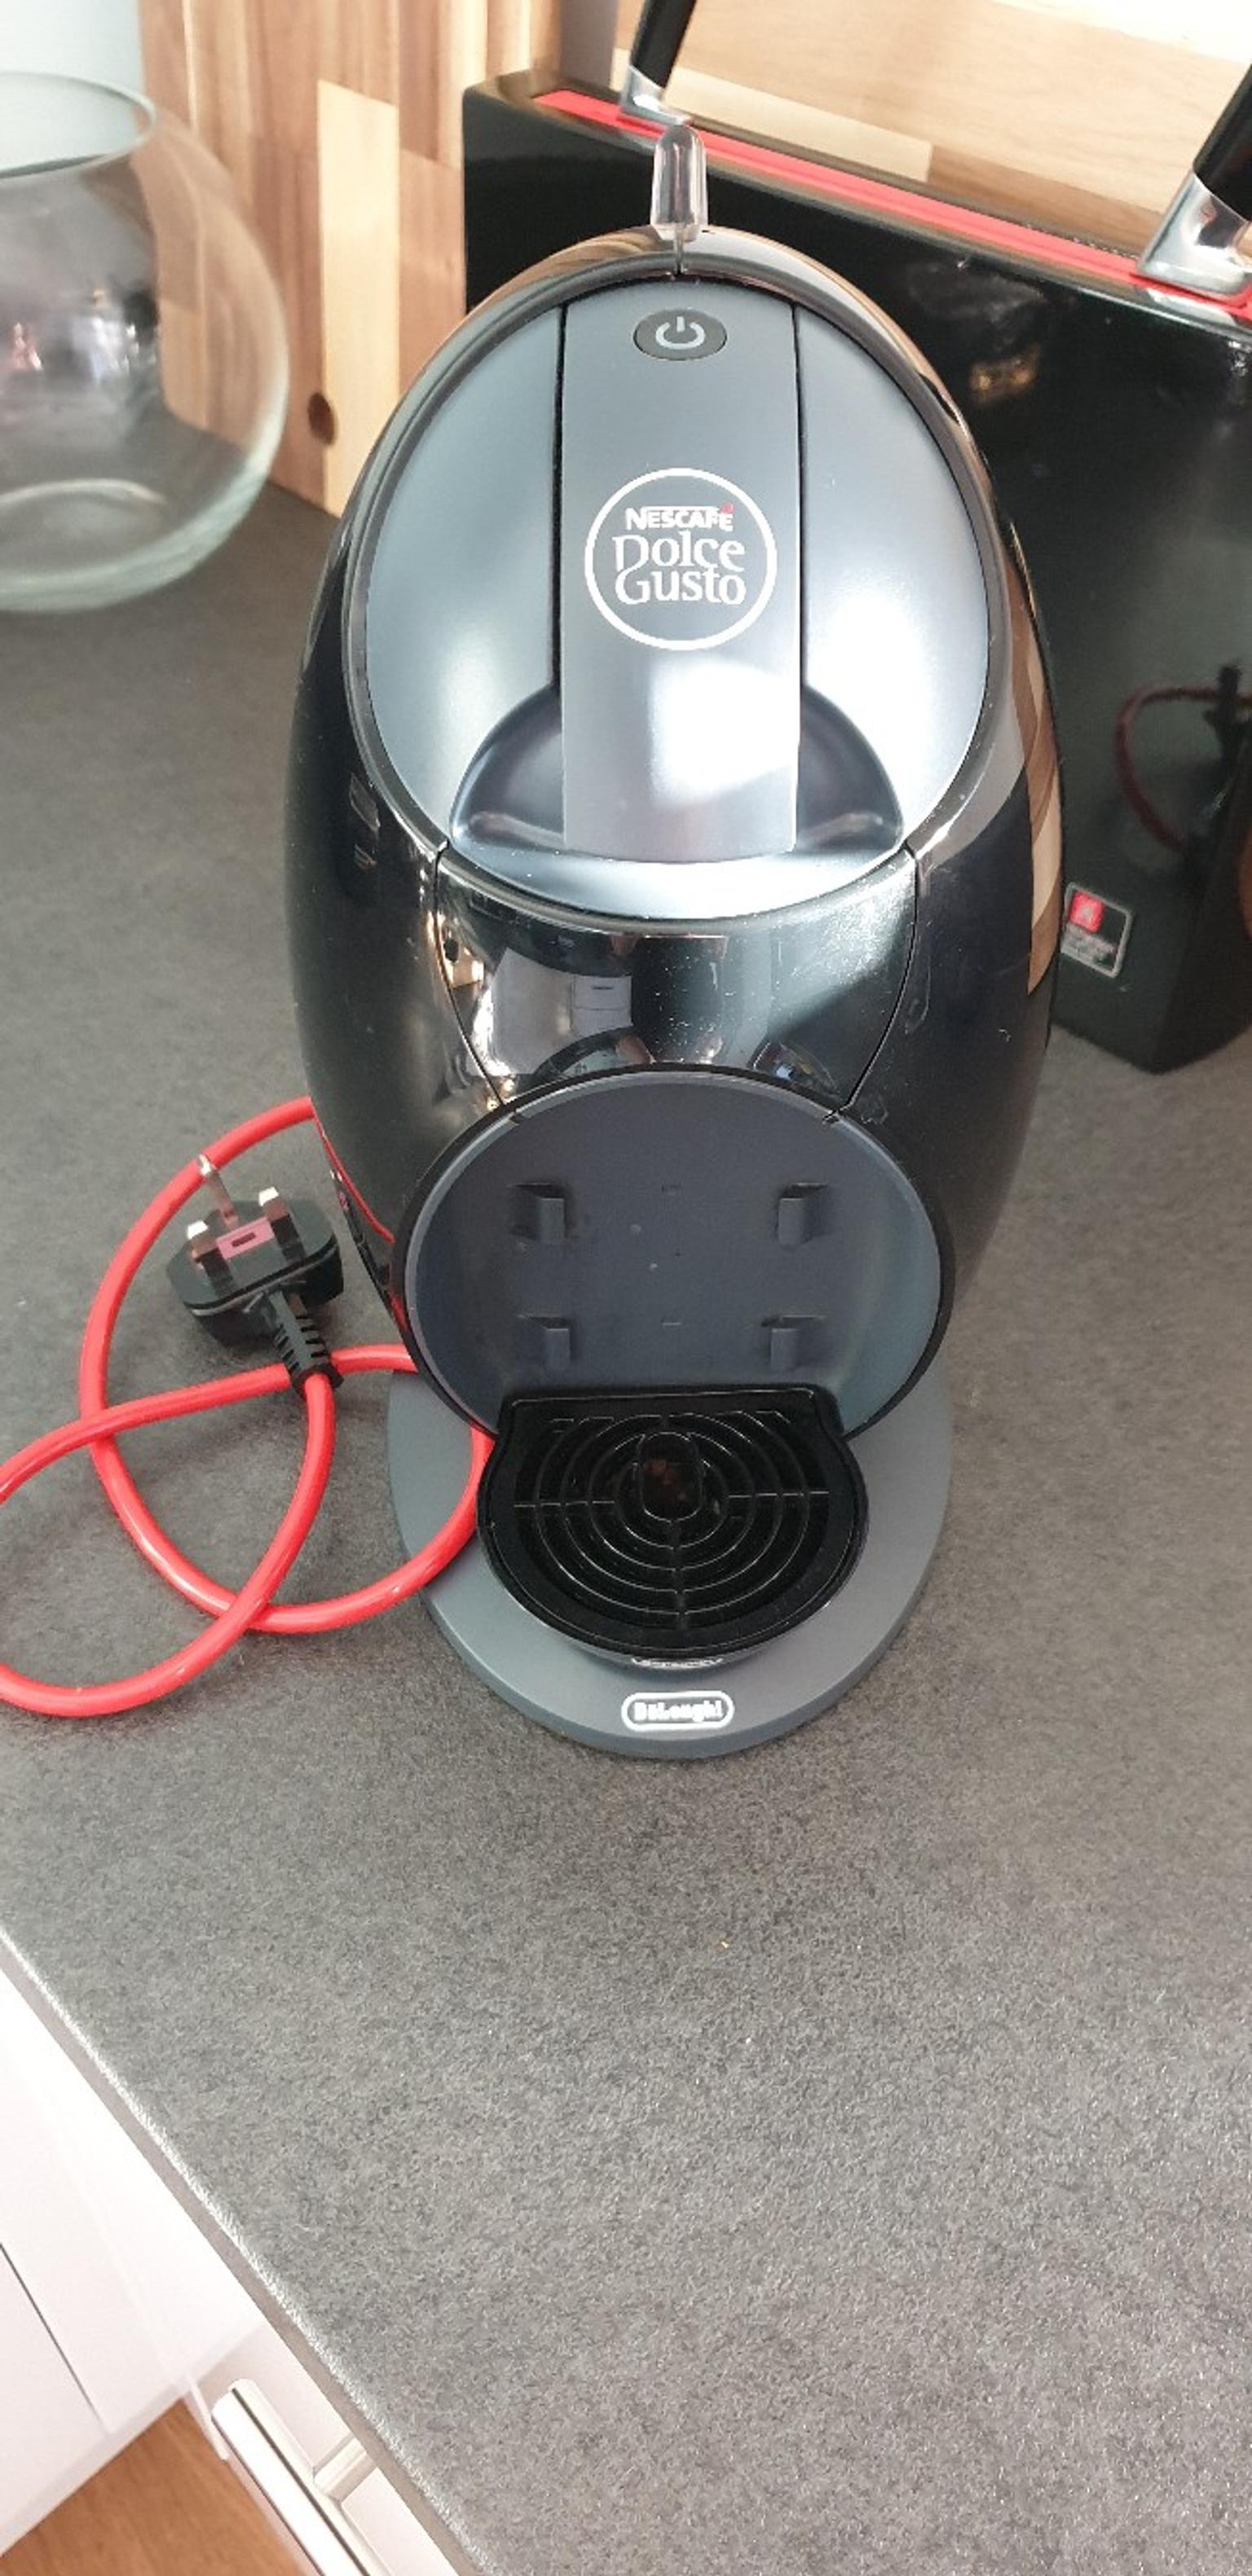 Dolce Gusto Delonghi Coffee Machine Free Pods In Wakefield Fur 15 00 Zum Verkauf Shpock De